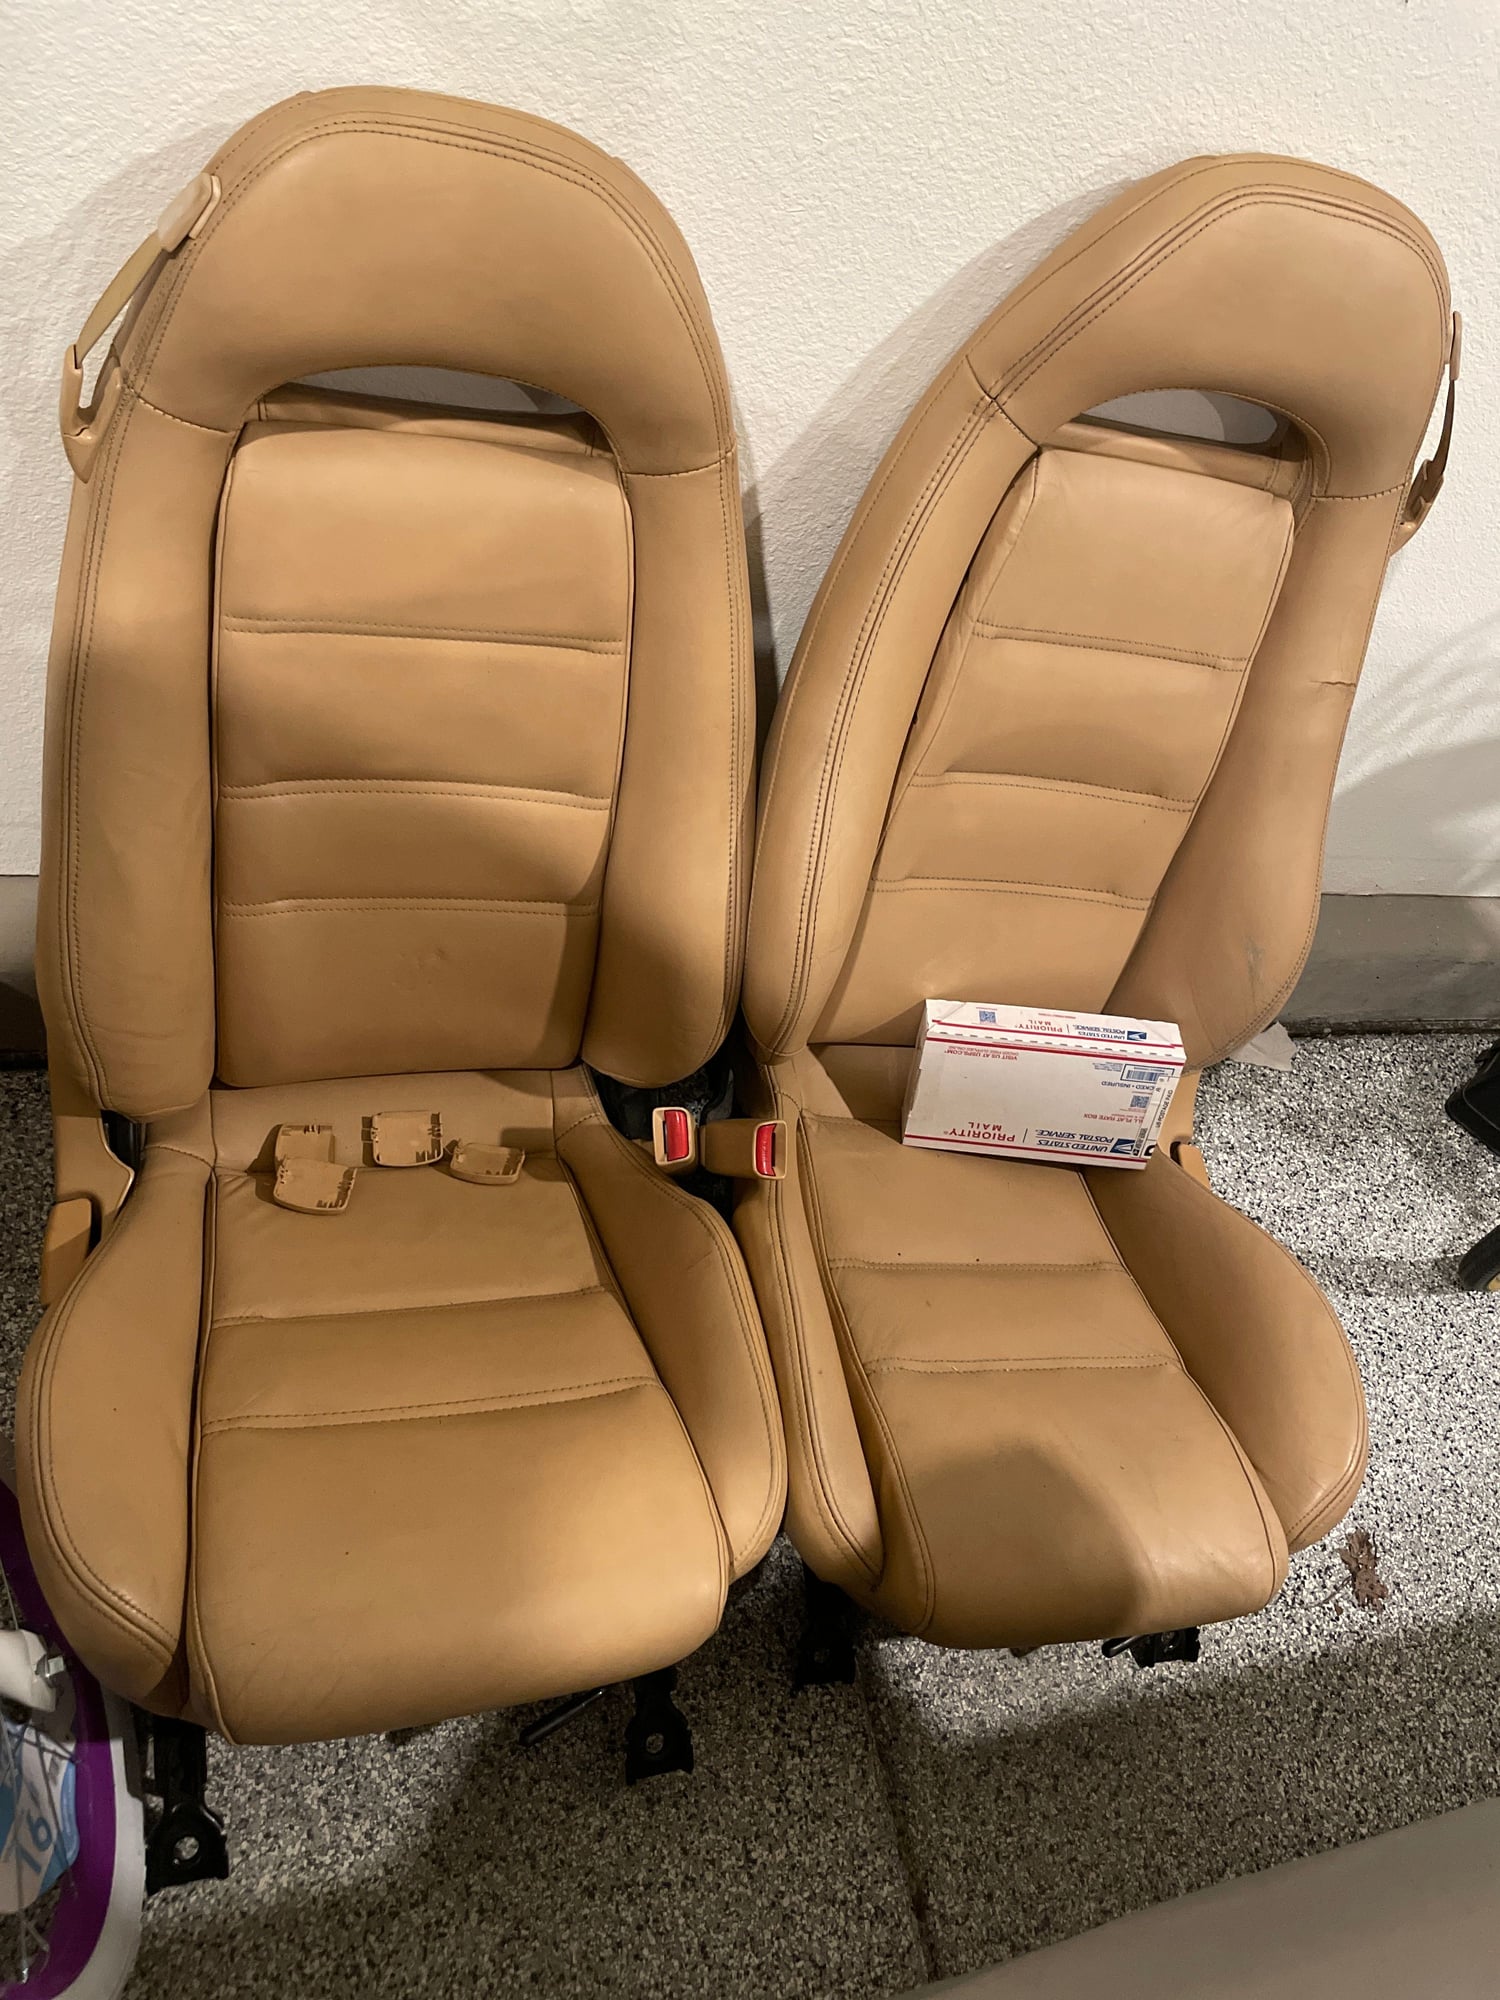 Interior/Upholstery - Tan interior - Used - 1993 to 1995 Mazda RX-7 - Sacramento, CA 95648, United States